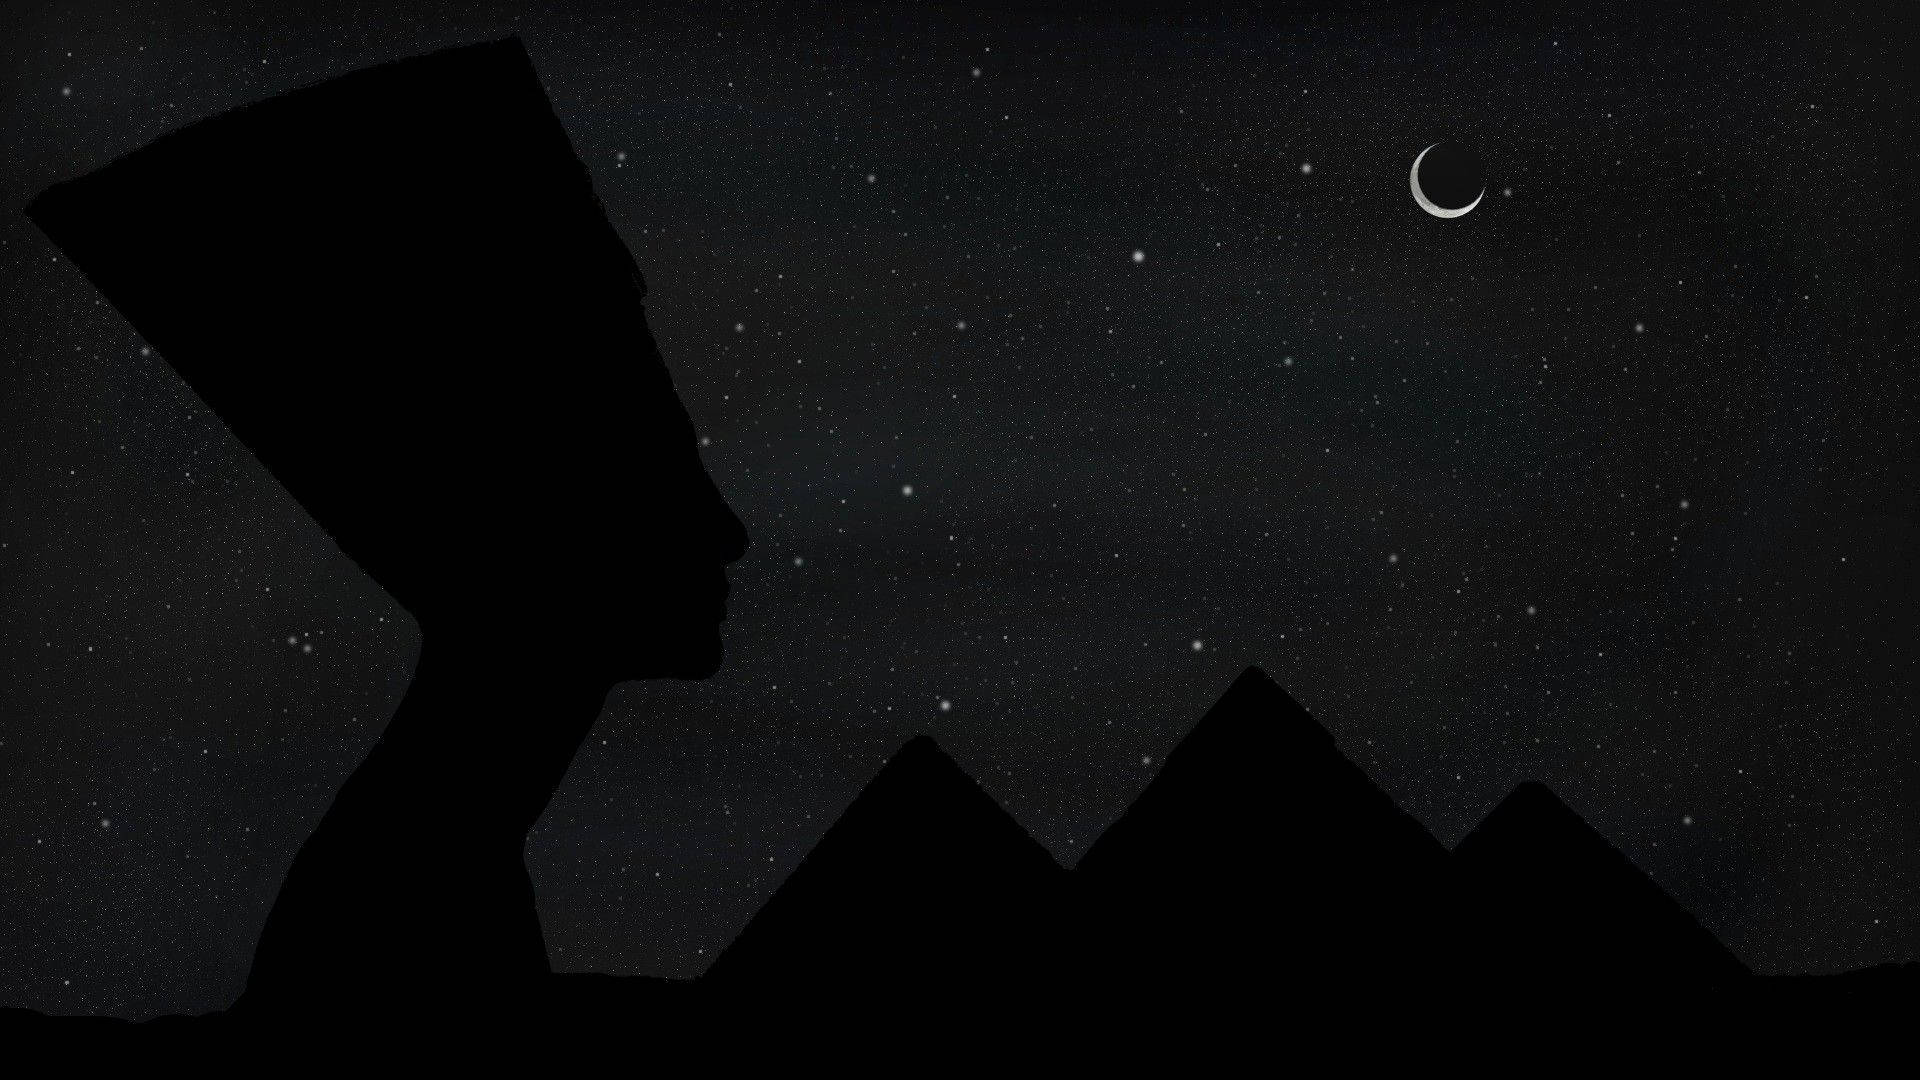 Black Pyramids With Sphinx Head